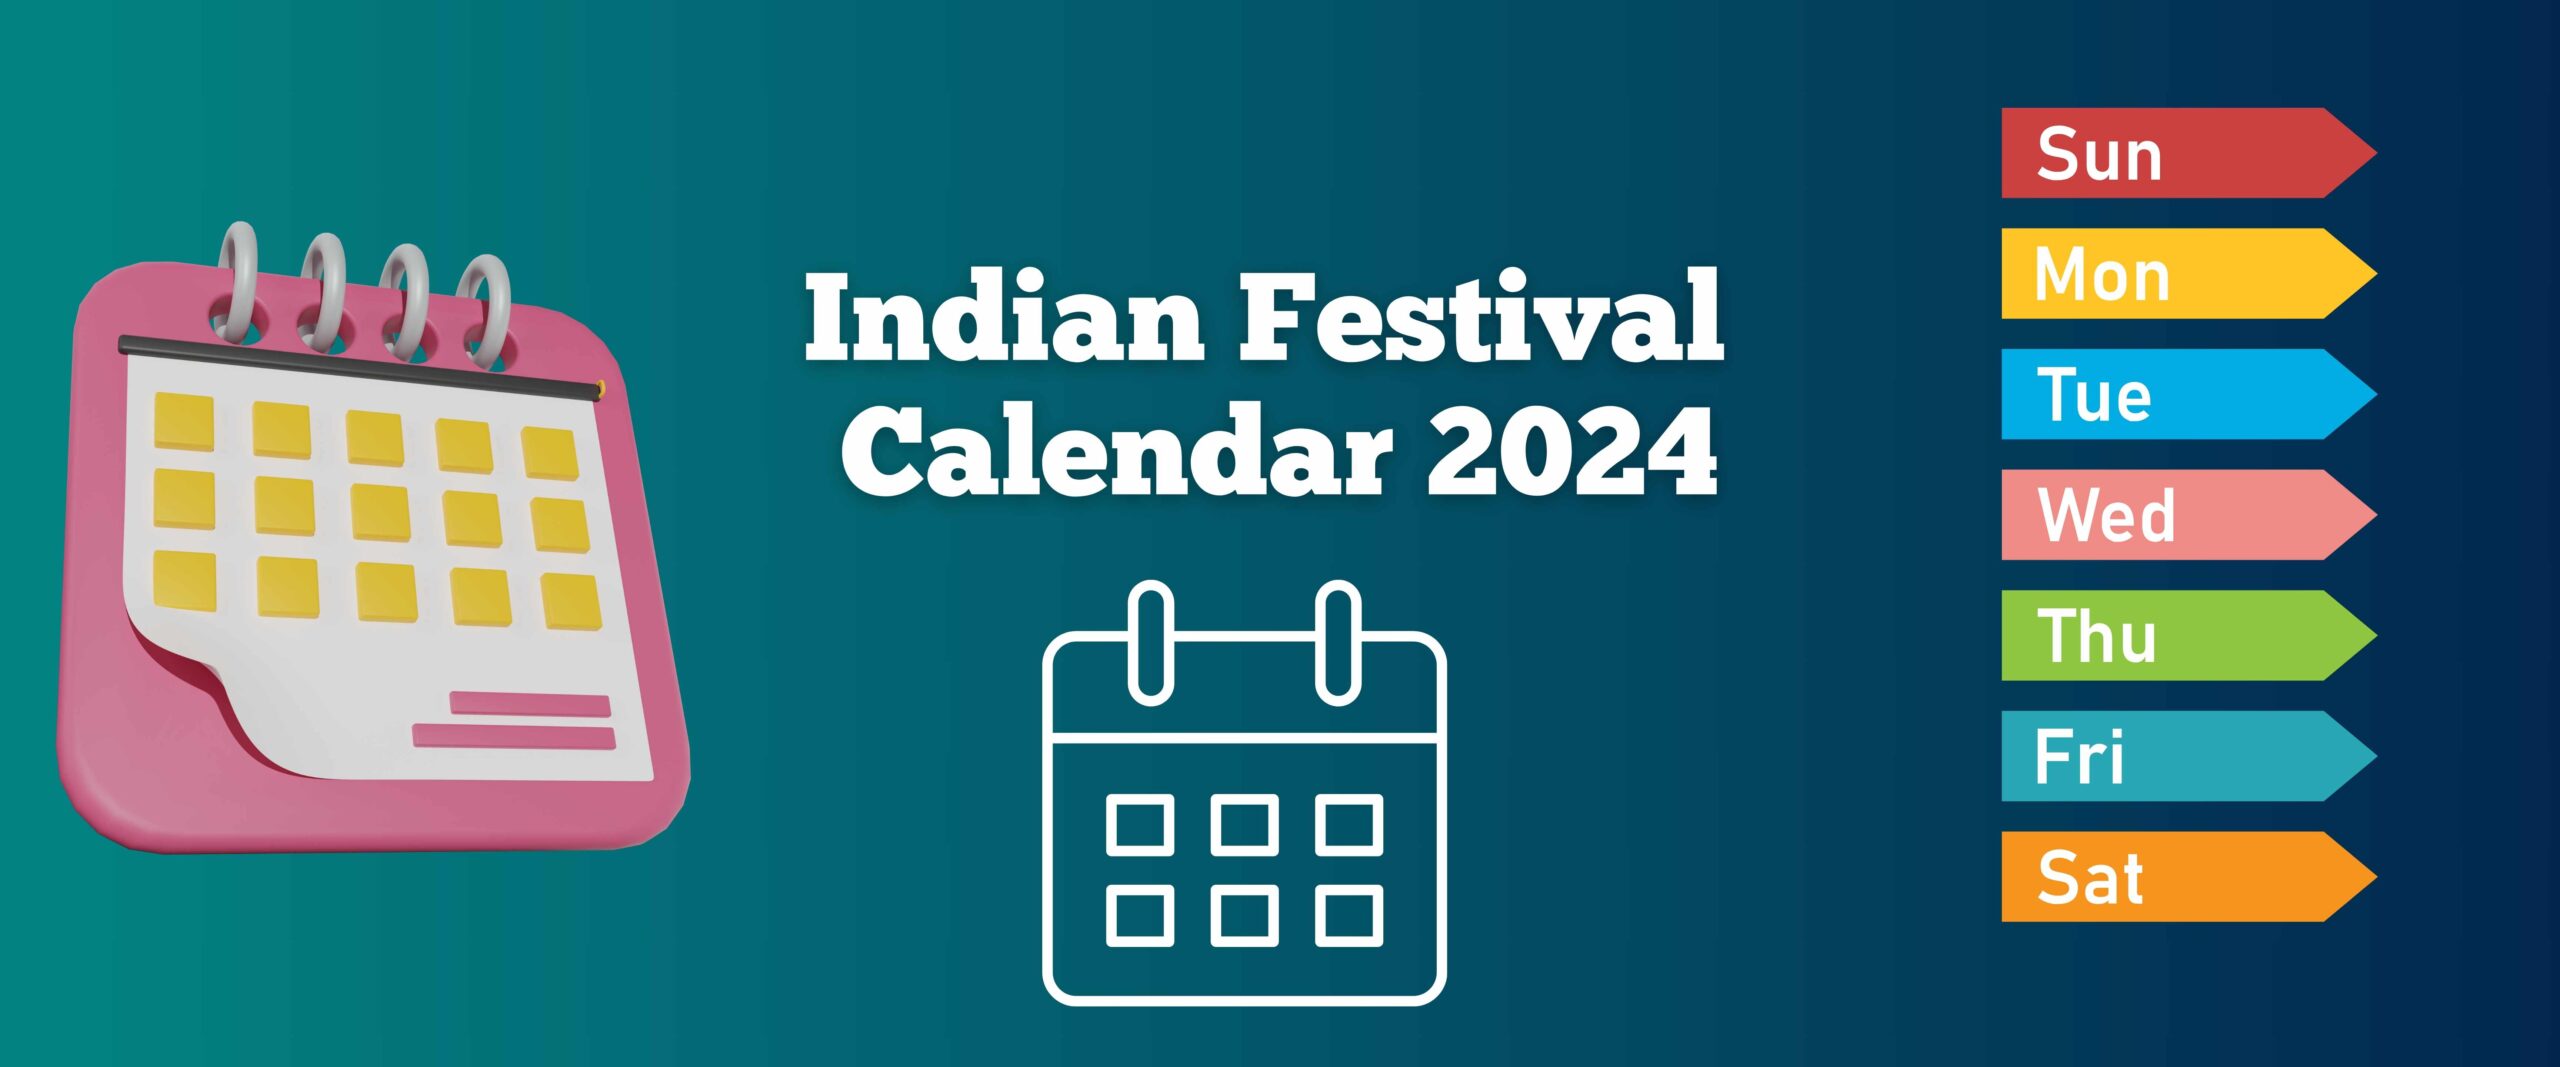 Indian Festival Calendar 2024 Indian Festivals & Holidays in Hindi